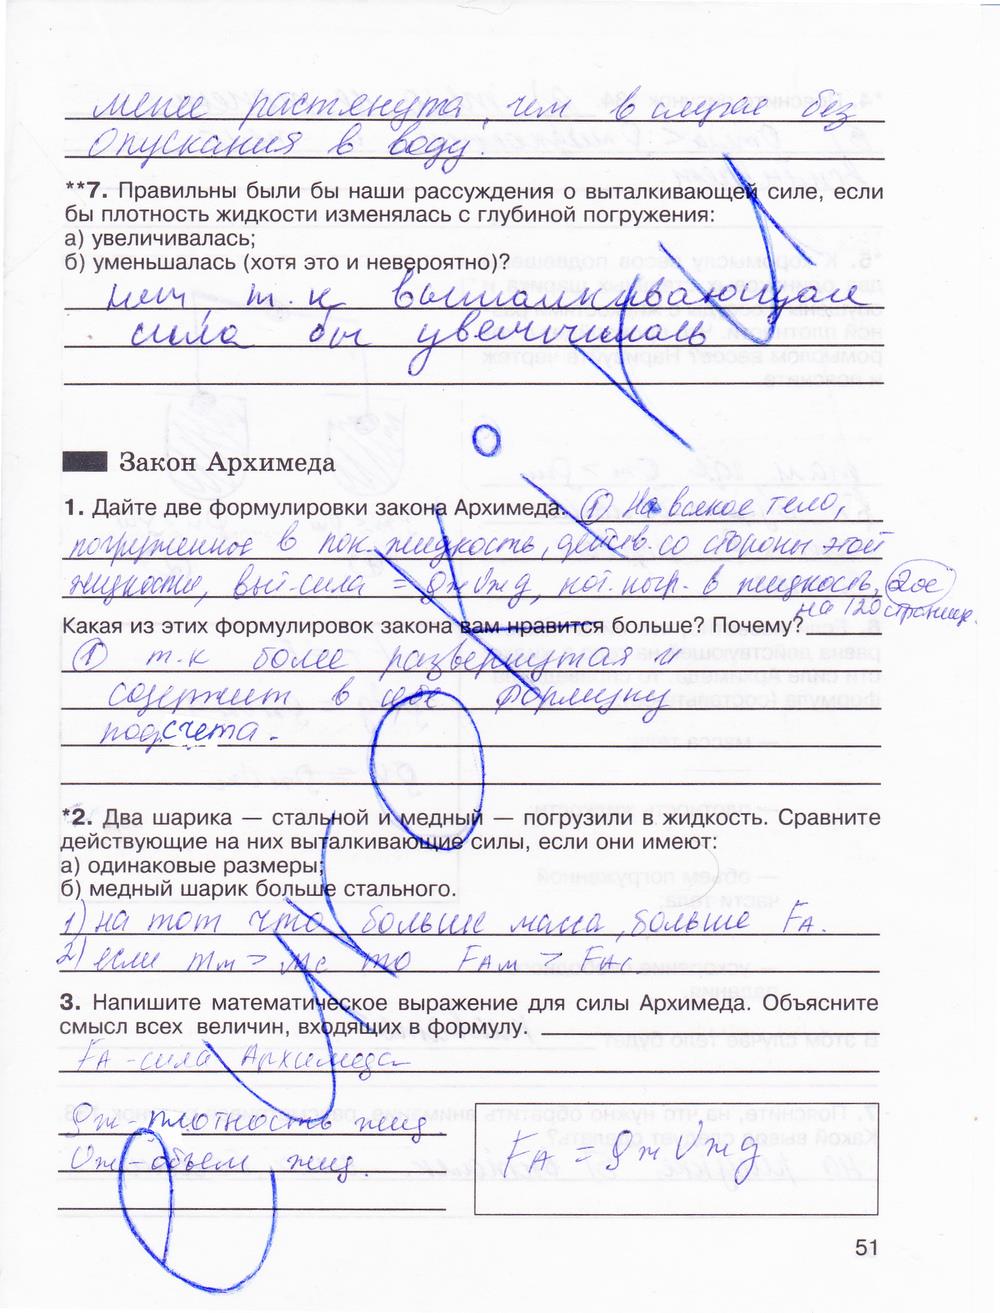 гдз 7 класс рабочая тетрадь страница 51 физика Мартынова, Бовин, Коротаев